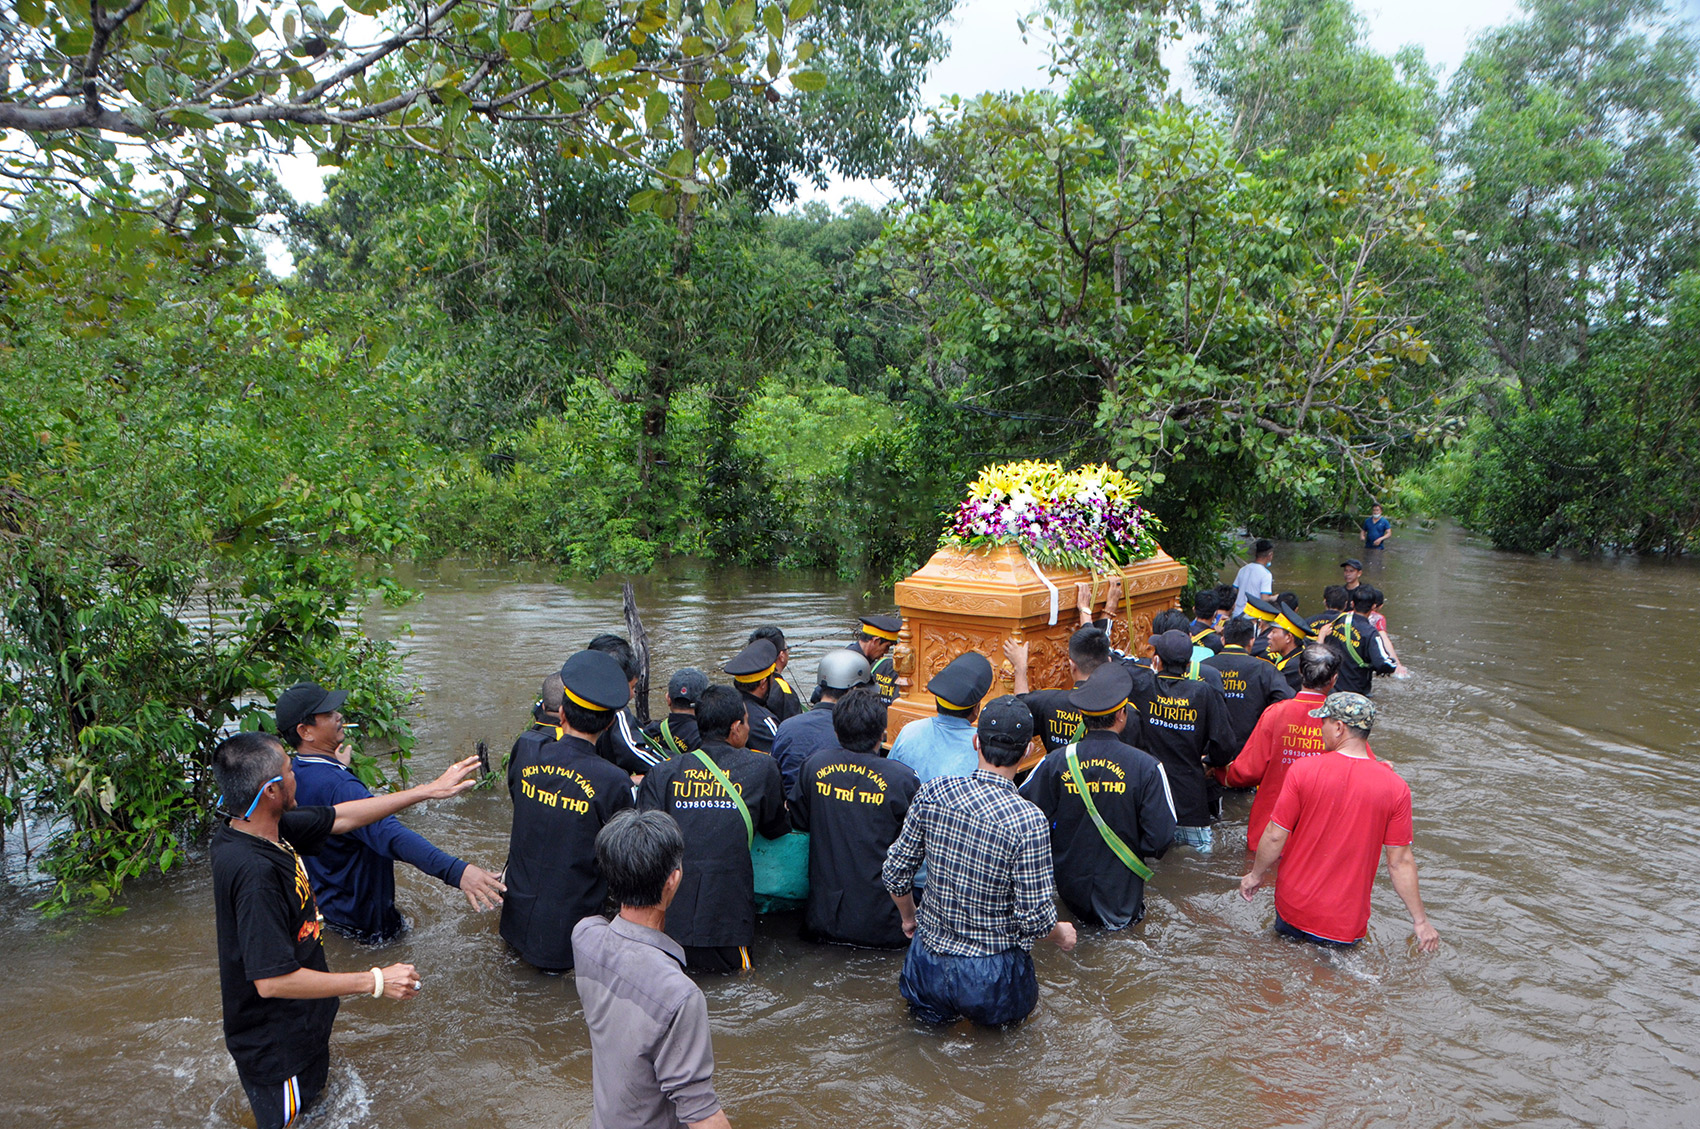 Men pushing a casket on a river